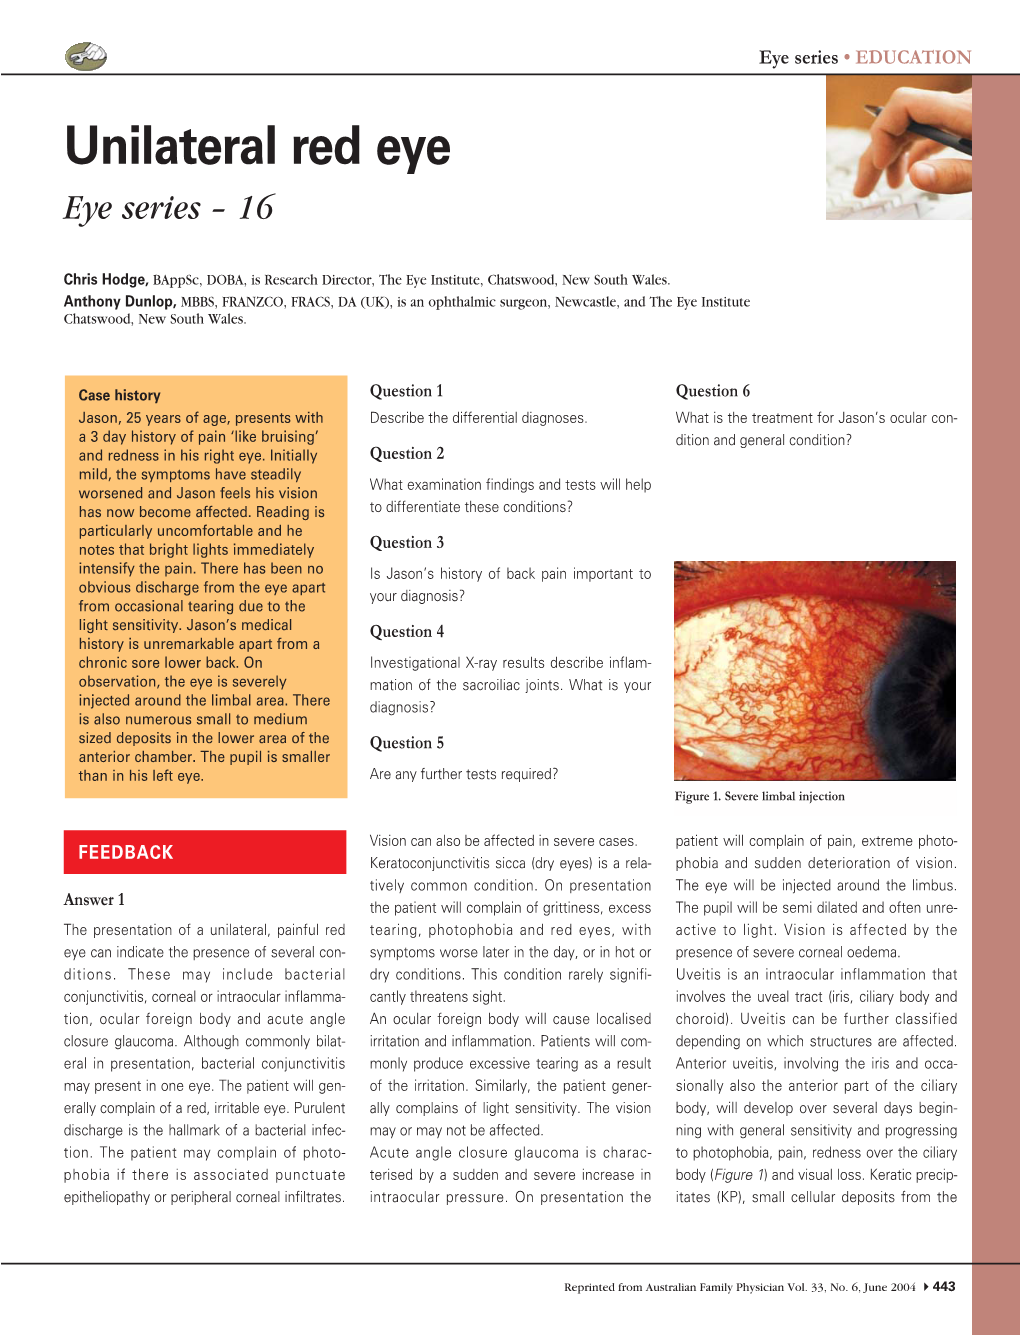 Unilateral Red Eye Eye Series – 16